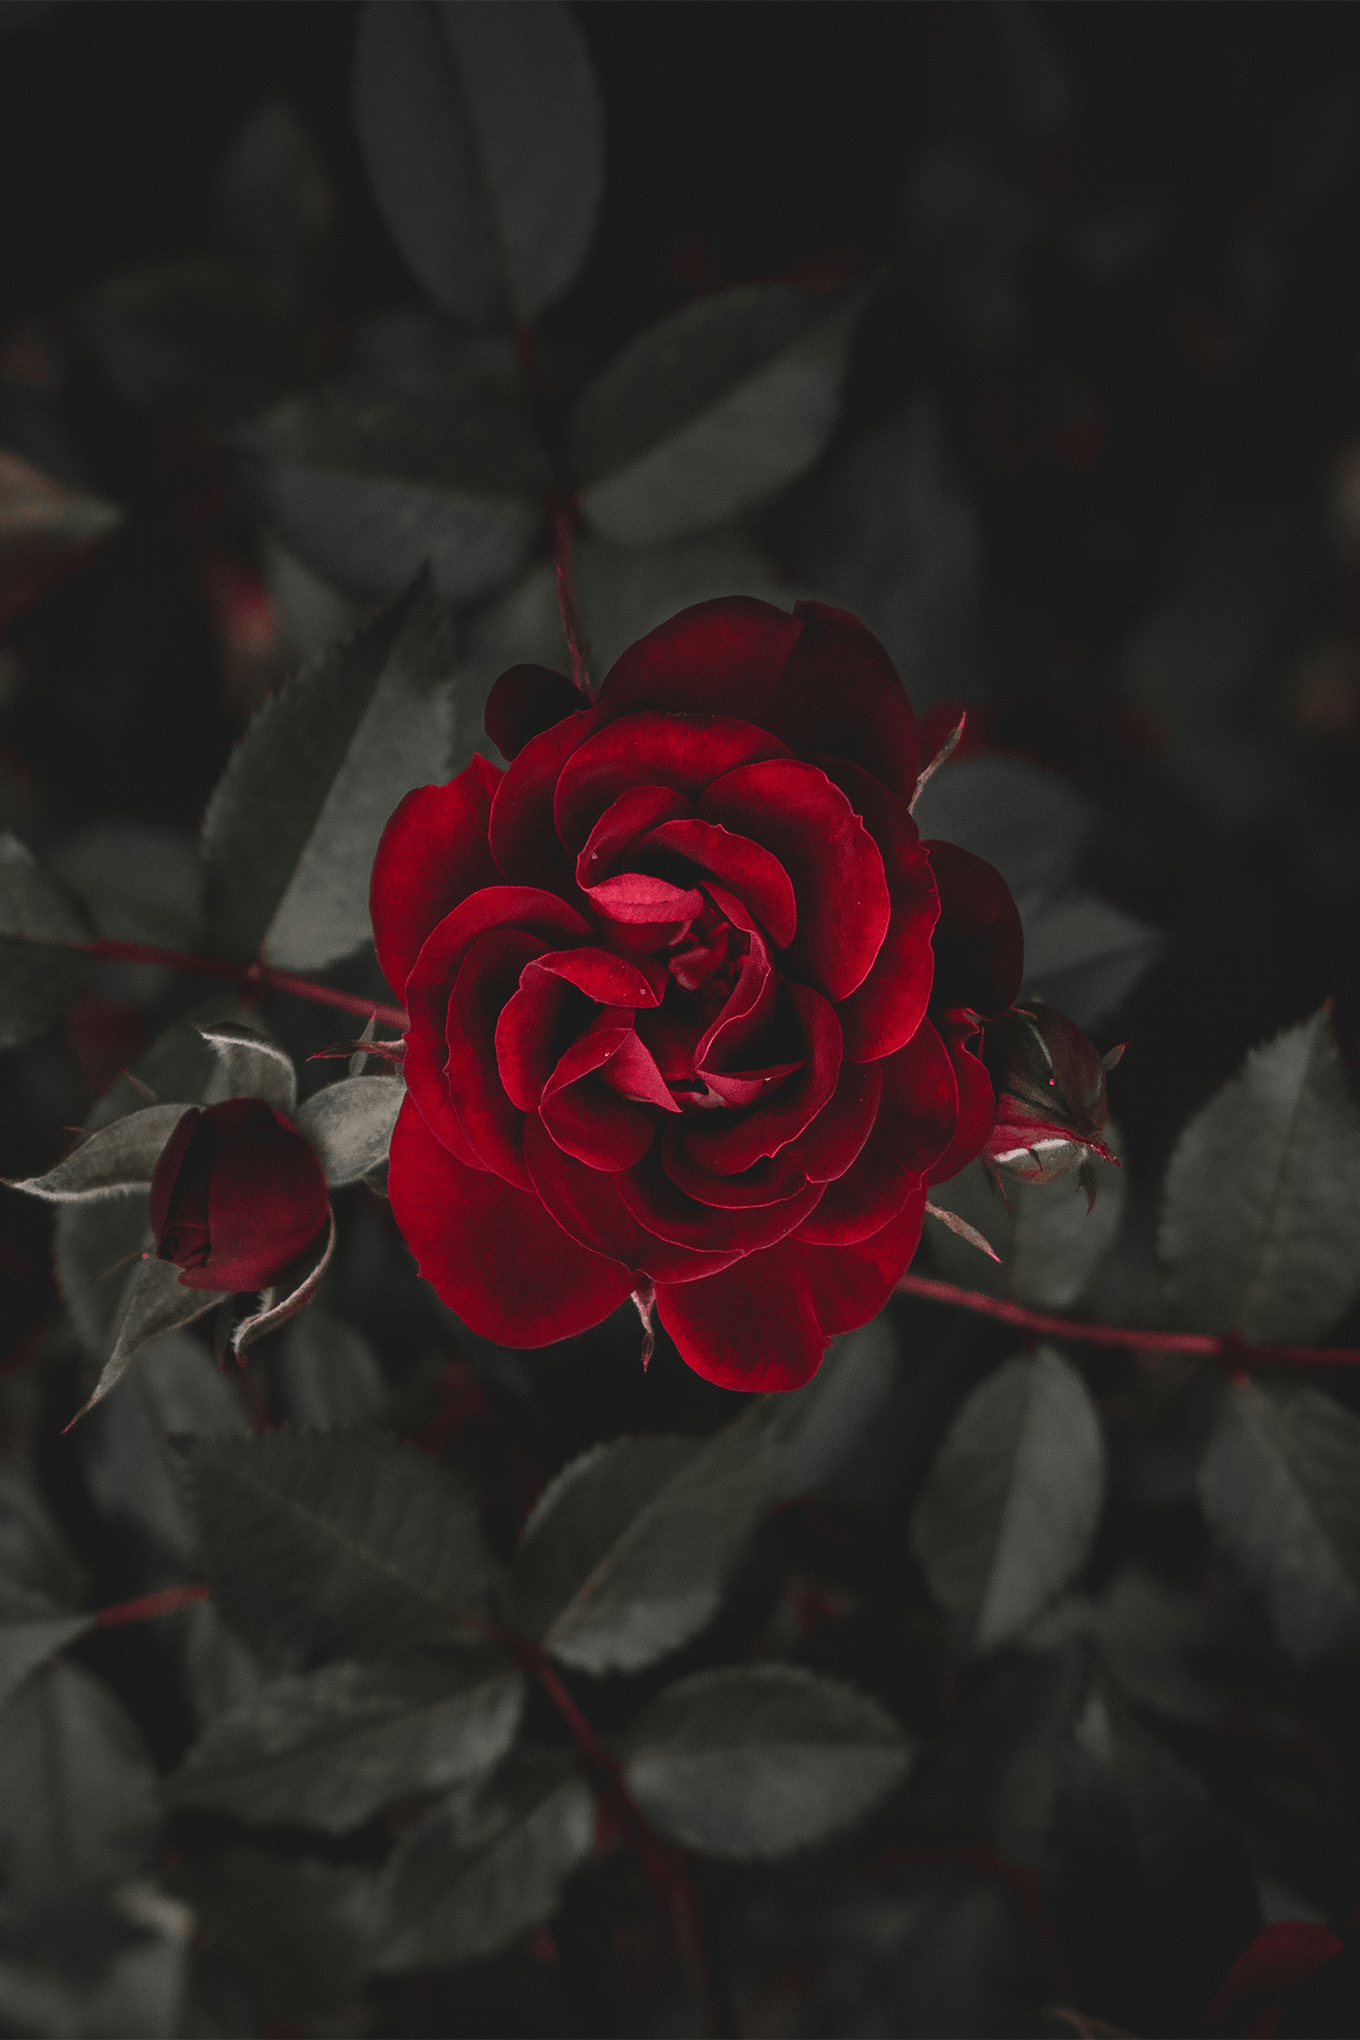 Dark Red Rose Wallpapers - Top Free Dark Red Rose Backgrounds ...